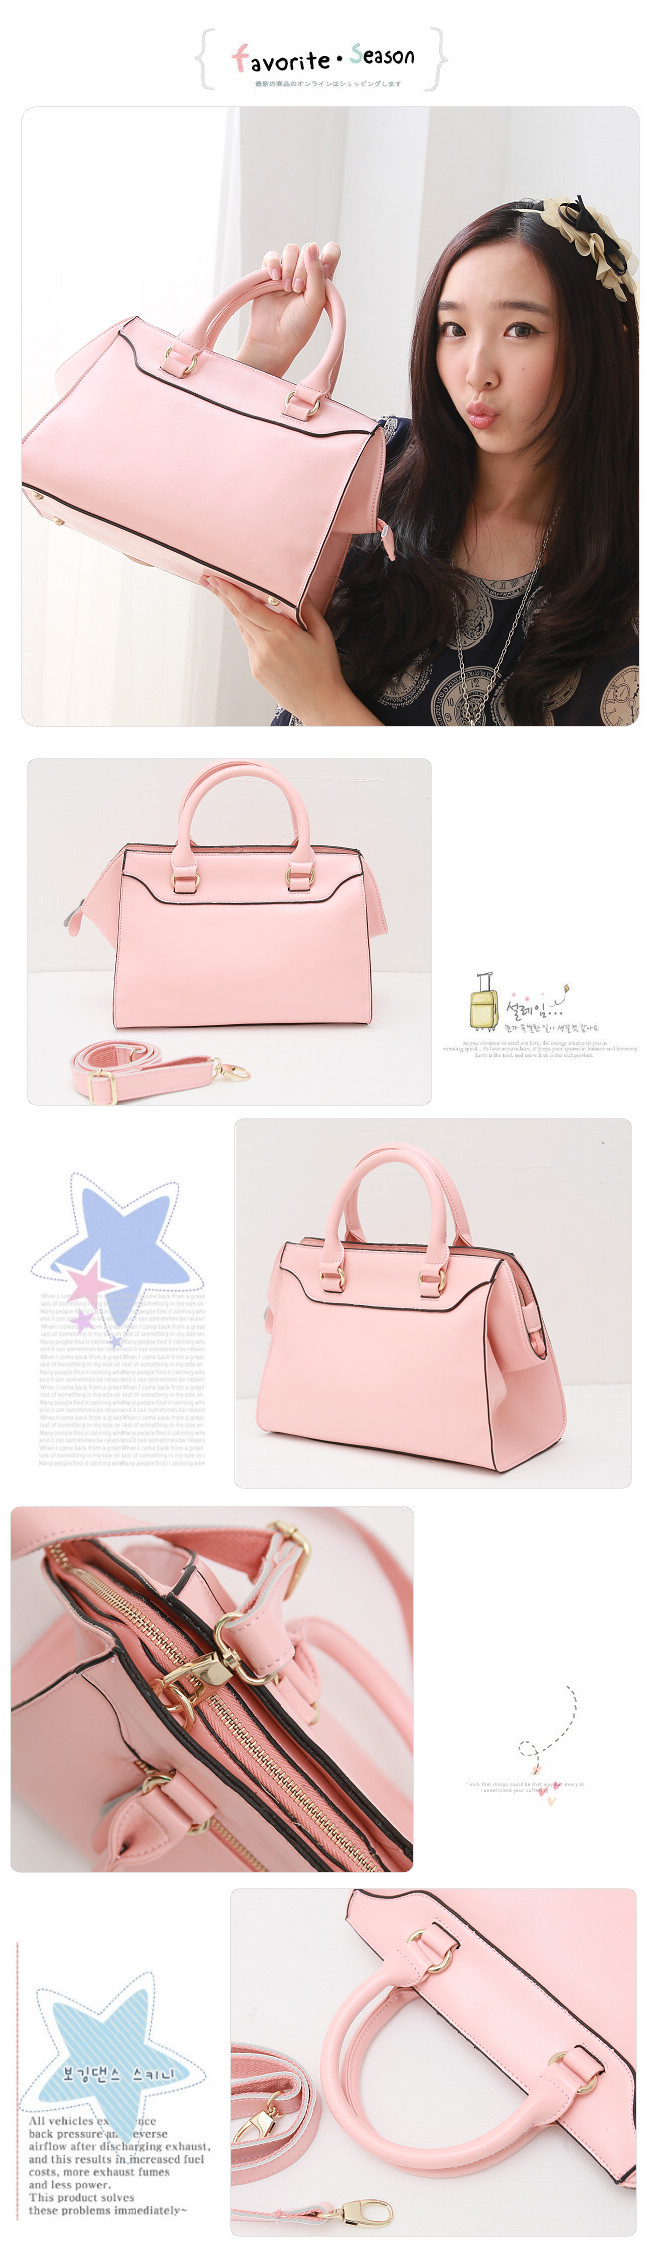 bag-pink-all.jpg